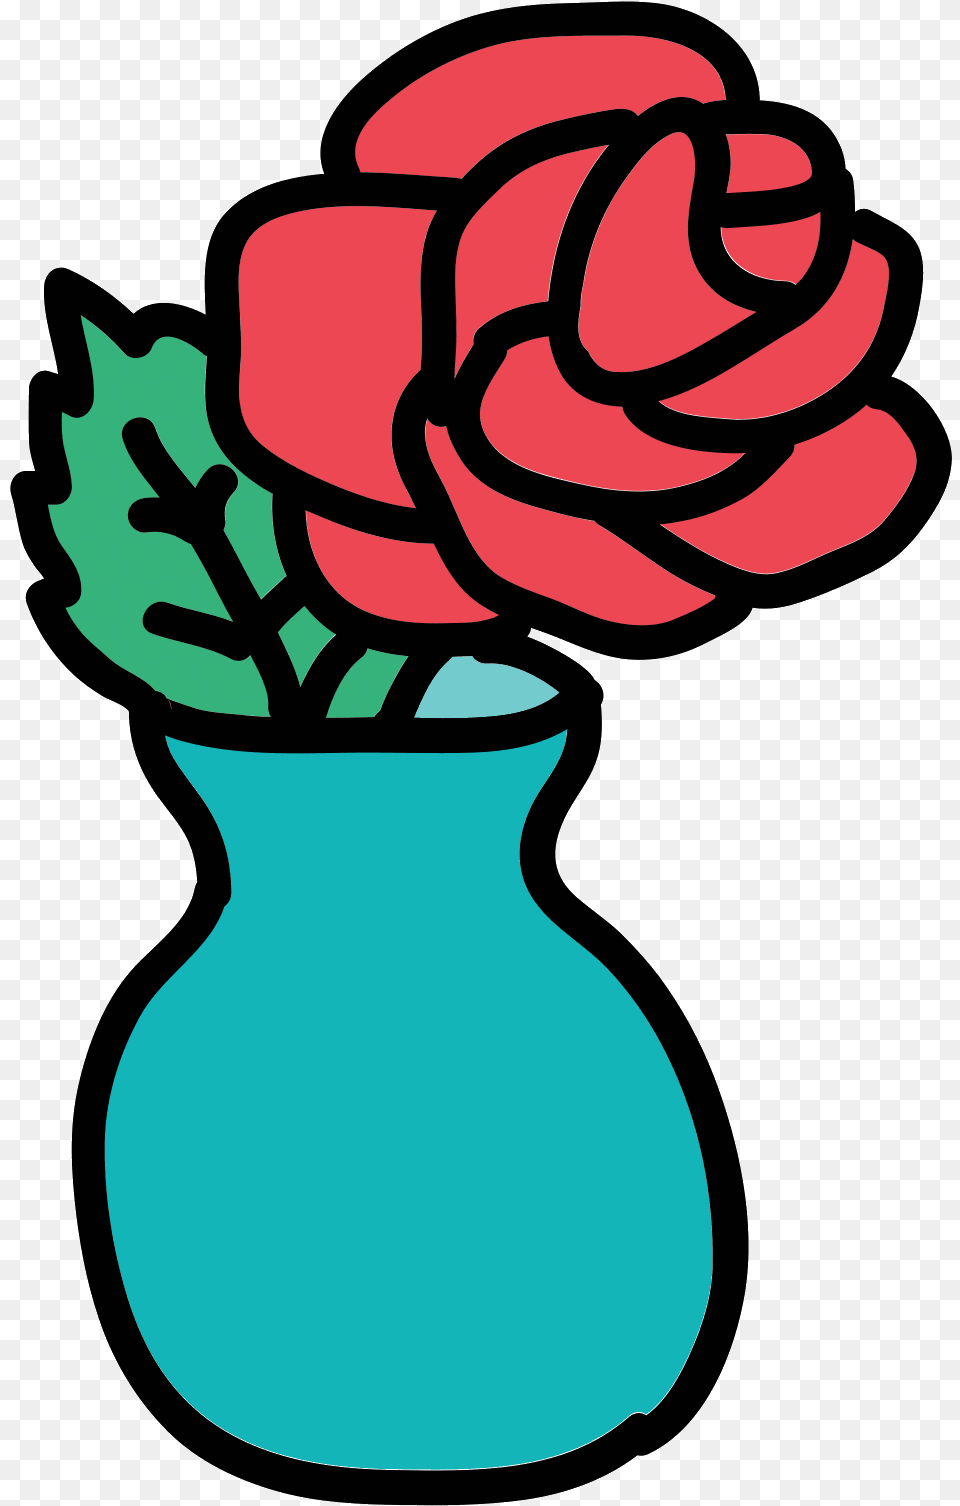 Download Wilted Flower Emoji Iphone The Vase Full Flower Vase Cartoon, Carnation, Rose, Pottery, Potted Plant Png